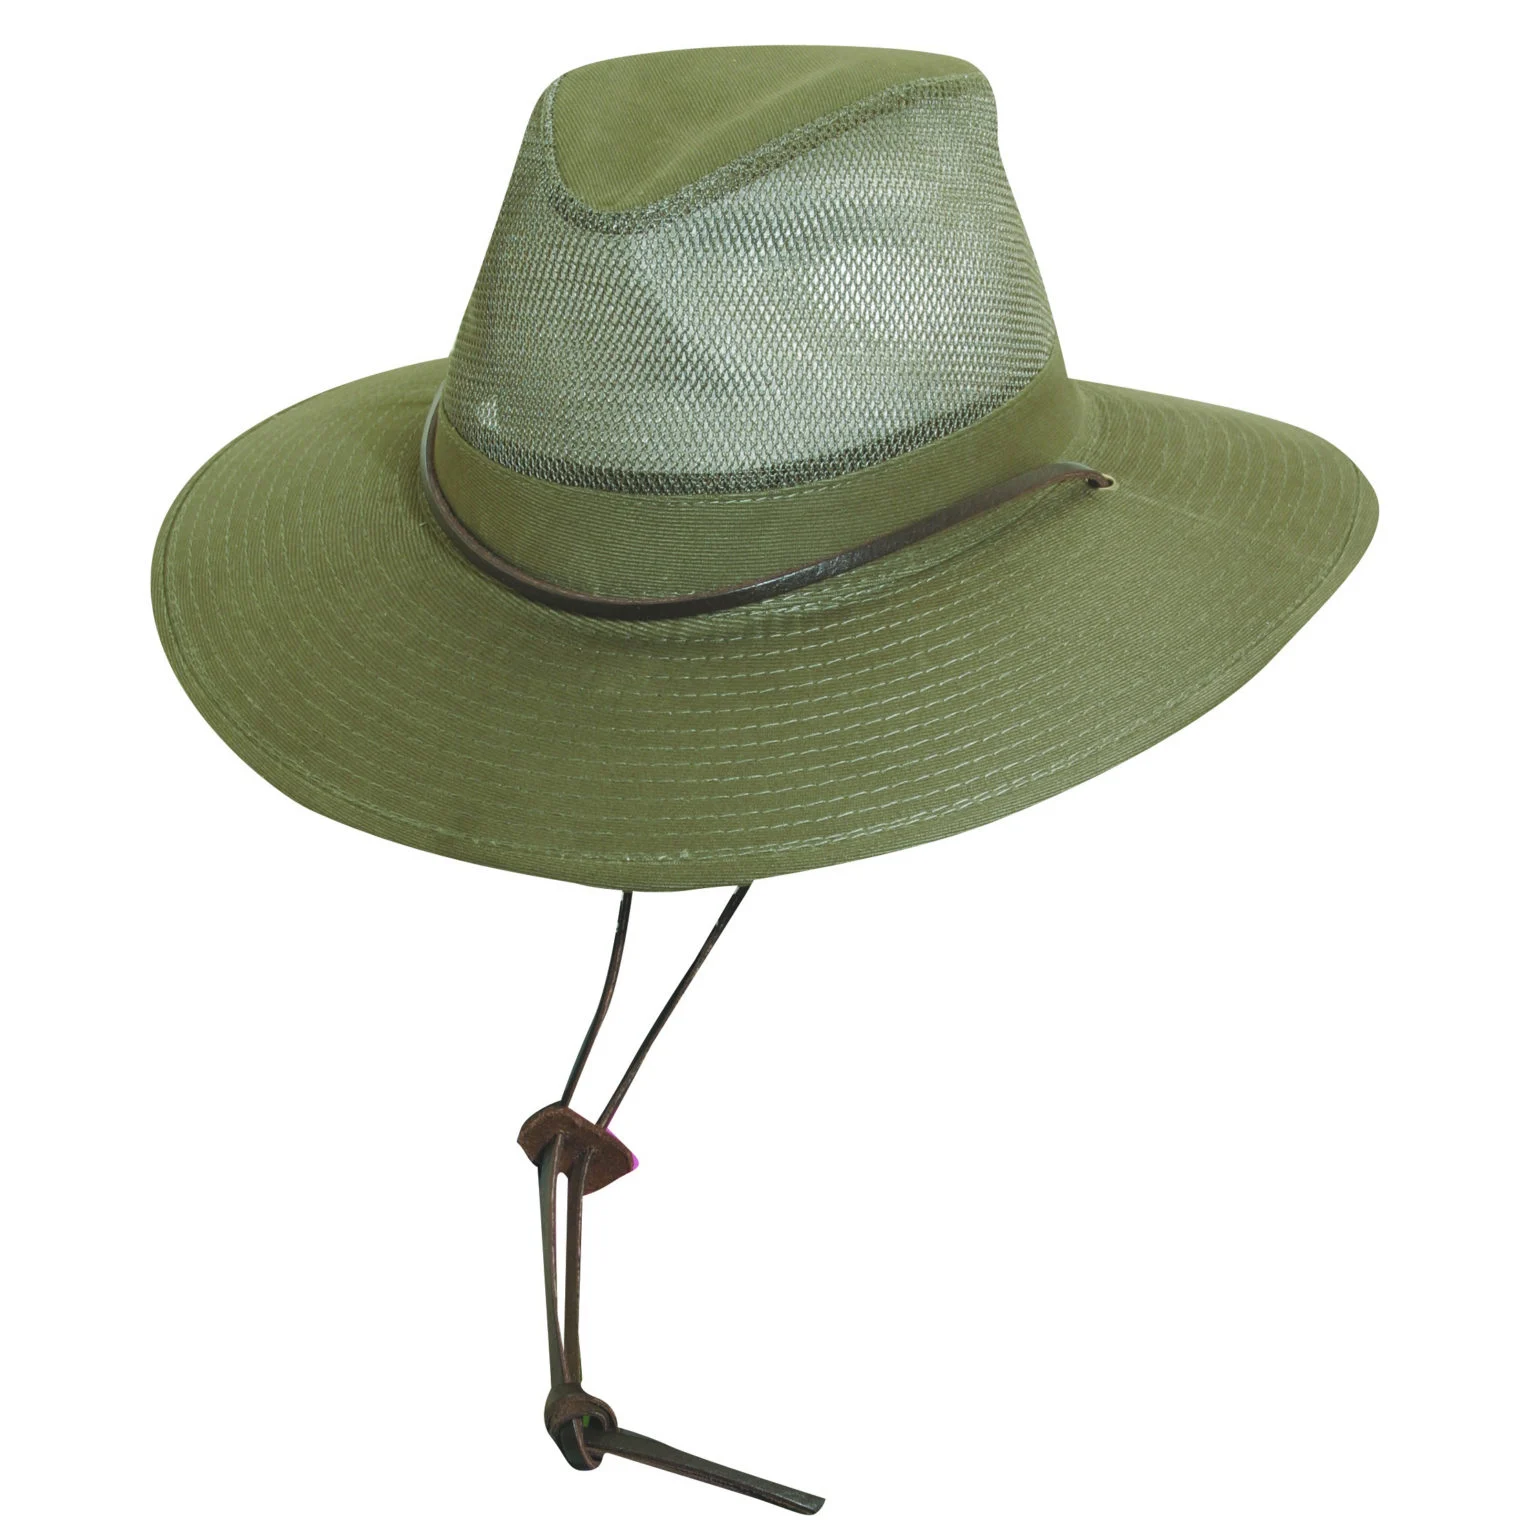 nice safari hat